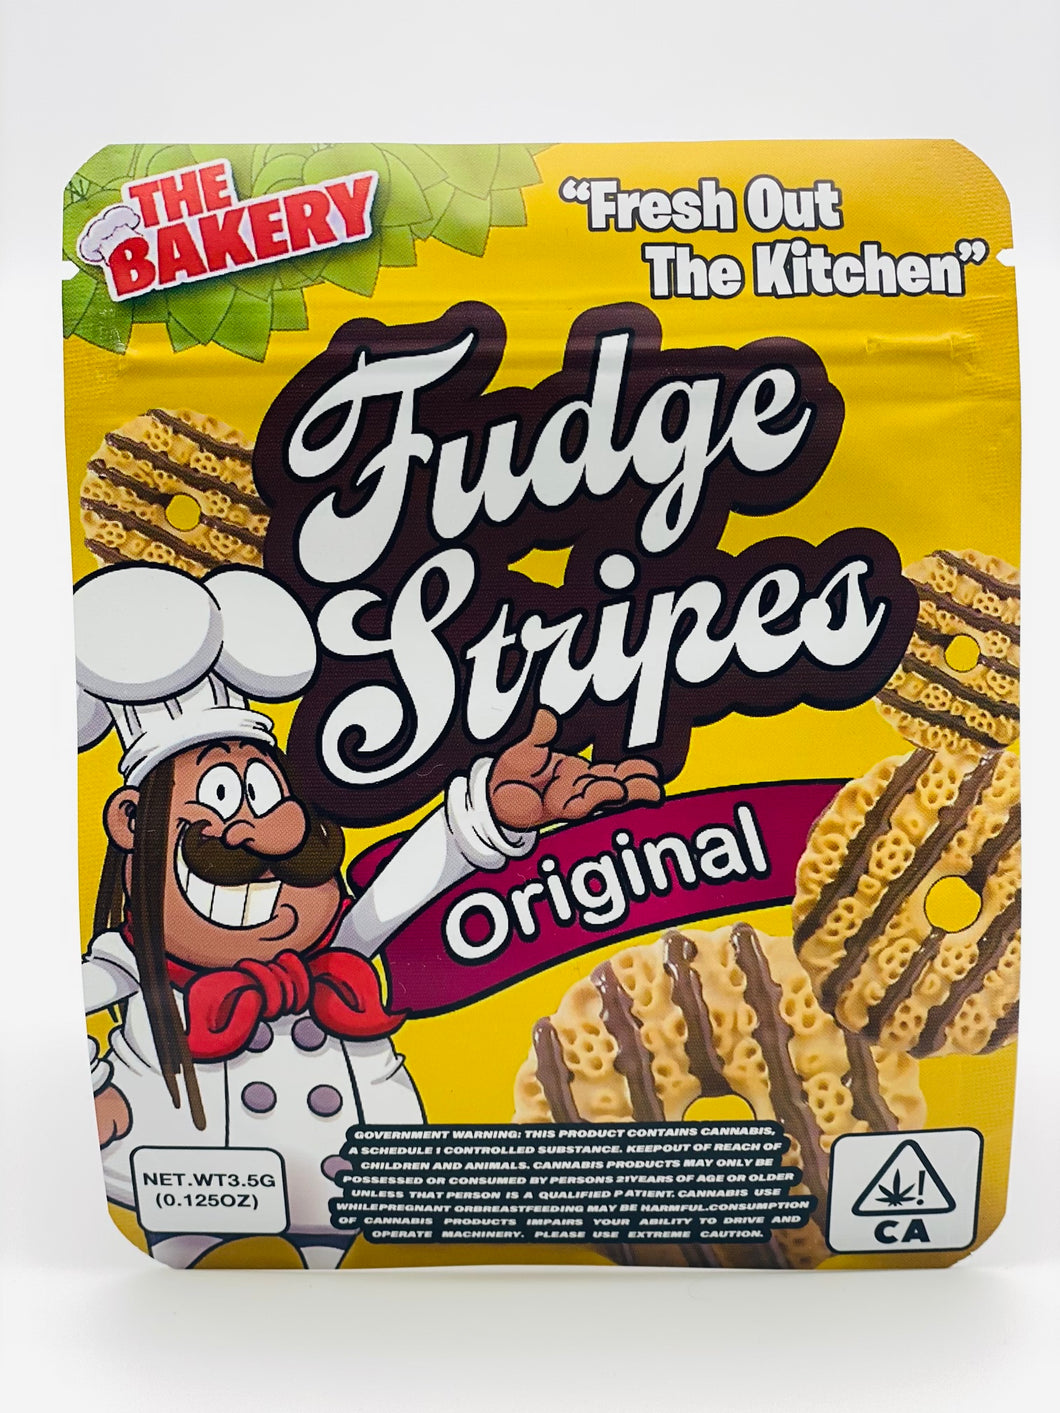 50 Fudge Stripes Original 3.5-gram Empty Mylar bags